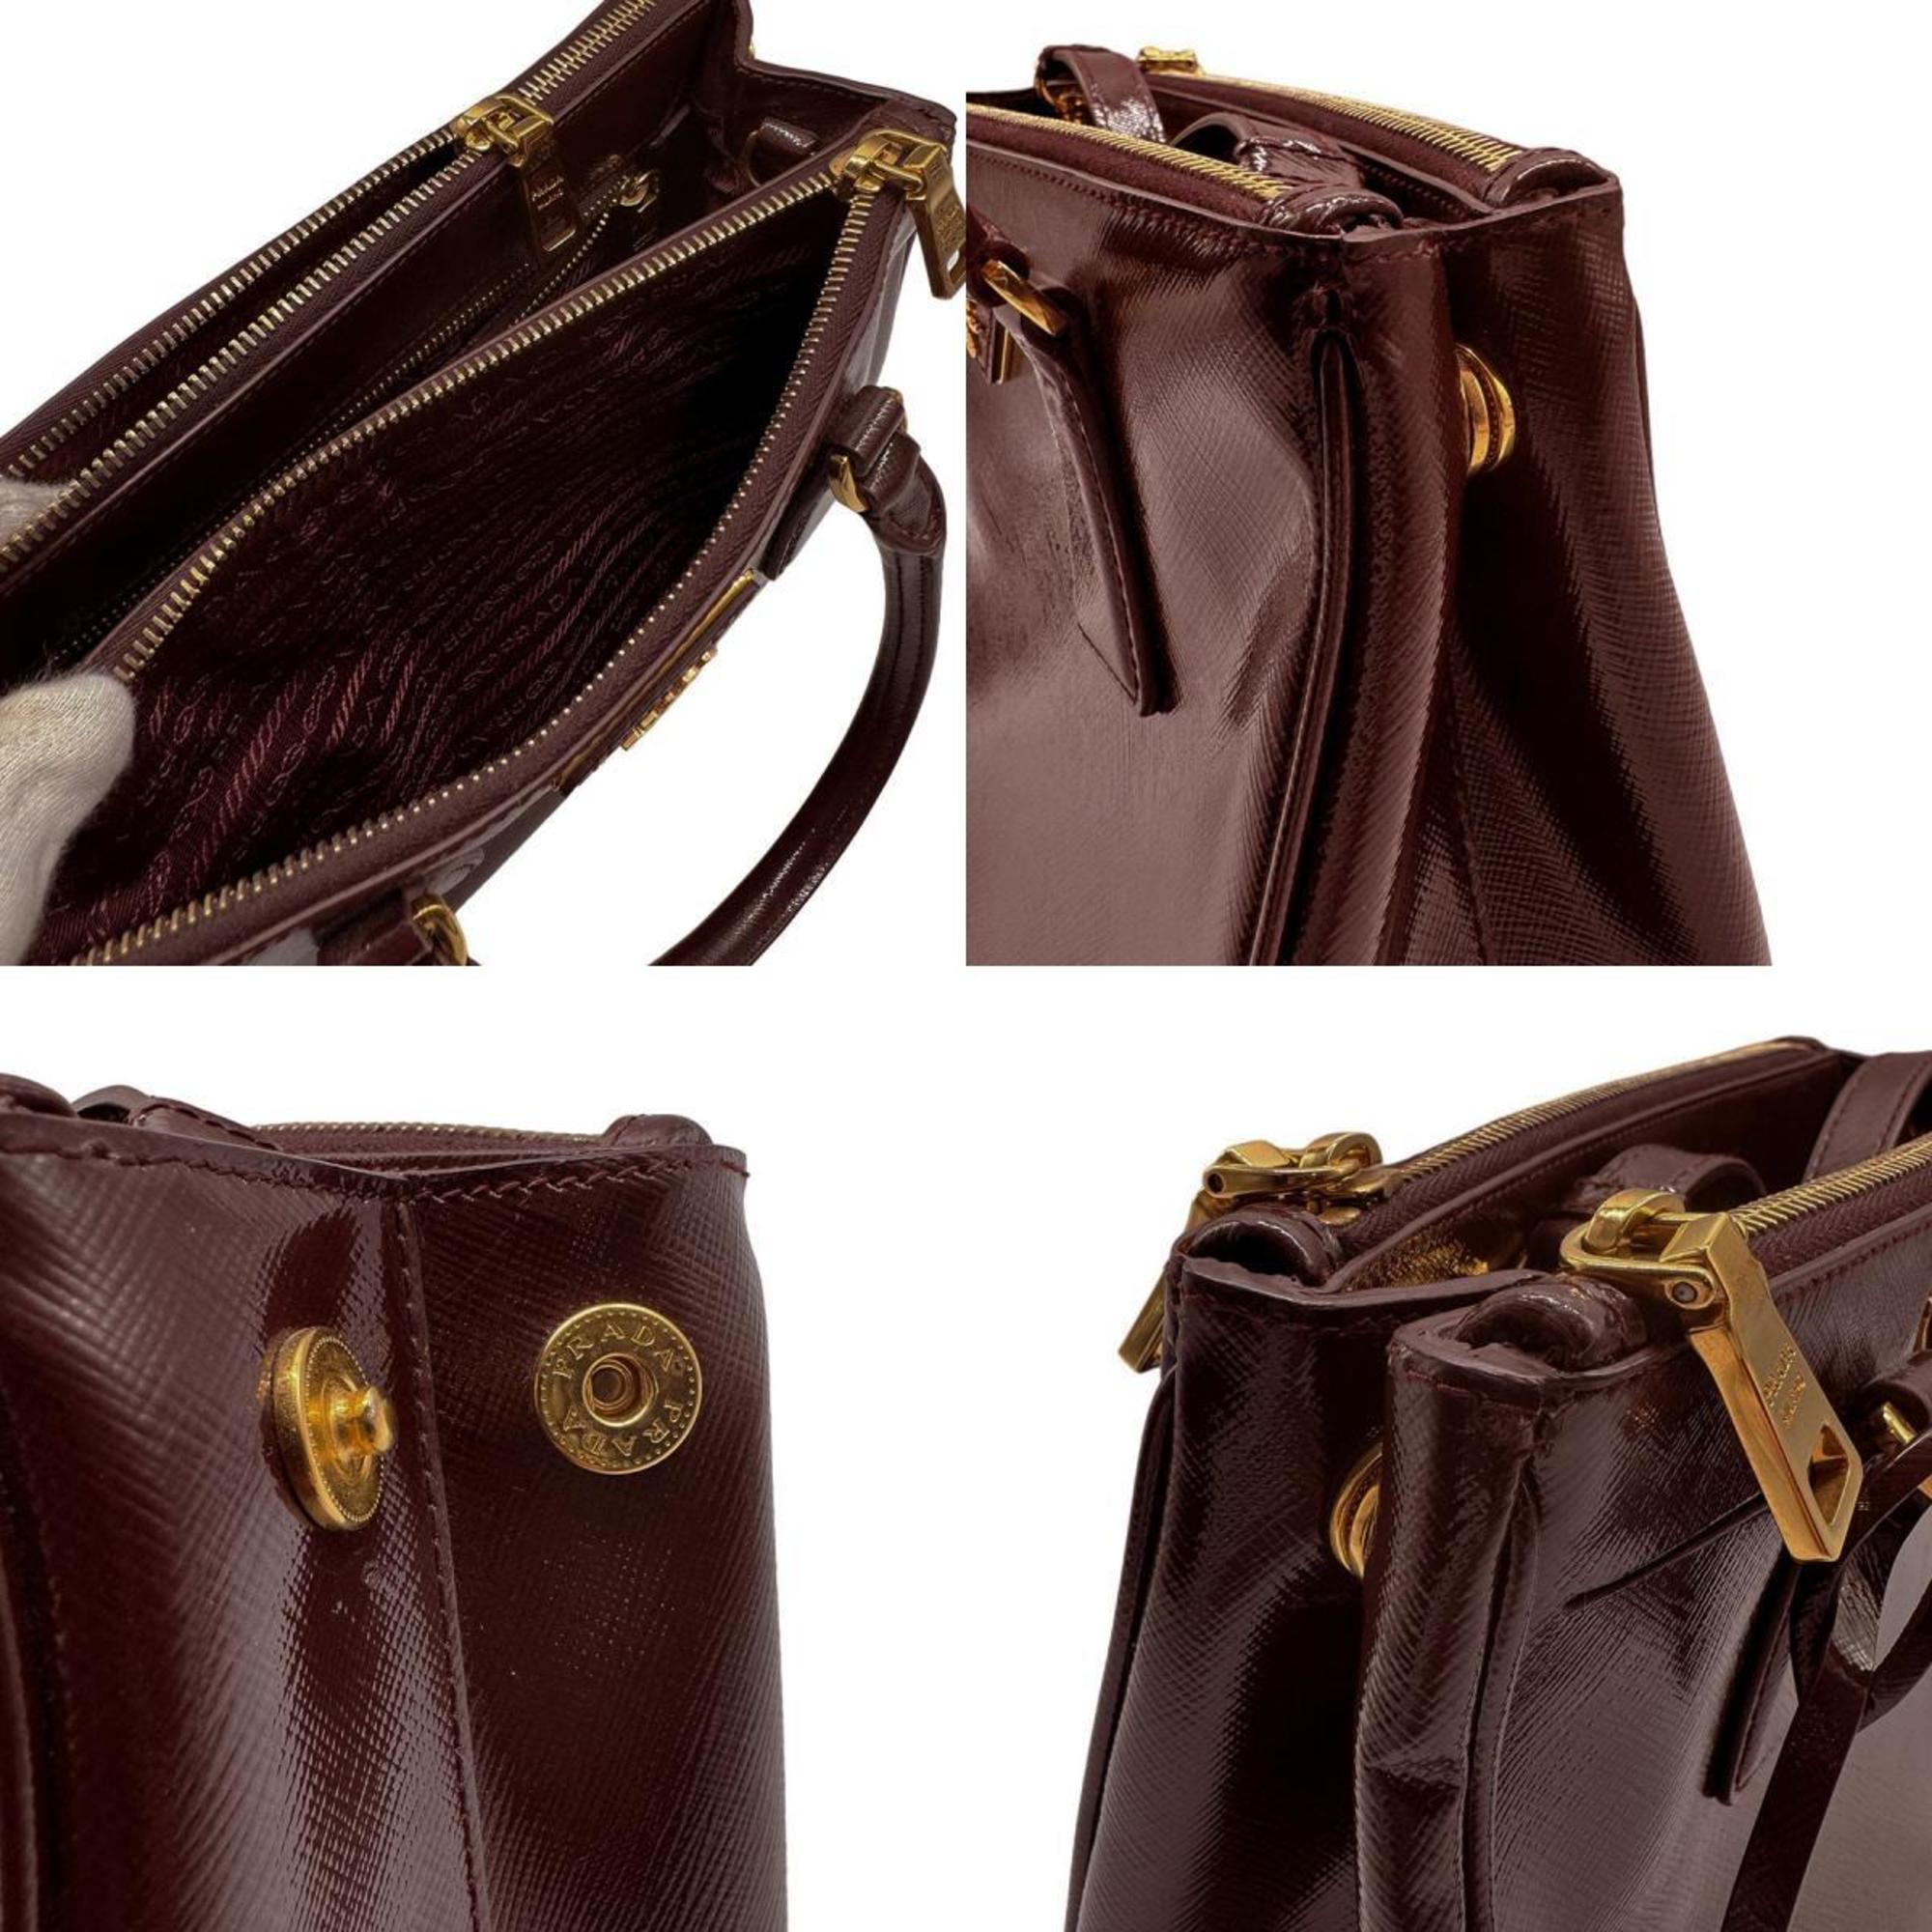 PRADA Handbag Shoulder Bag Patent Leather Bordeaux Women's BN2316 z0452